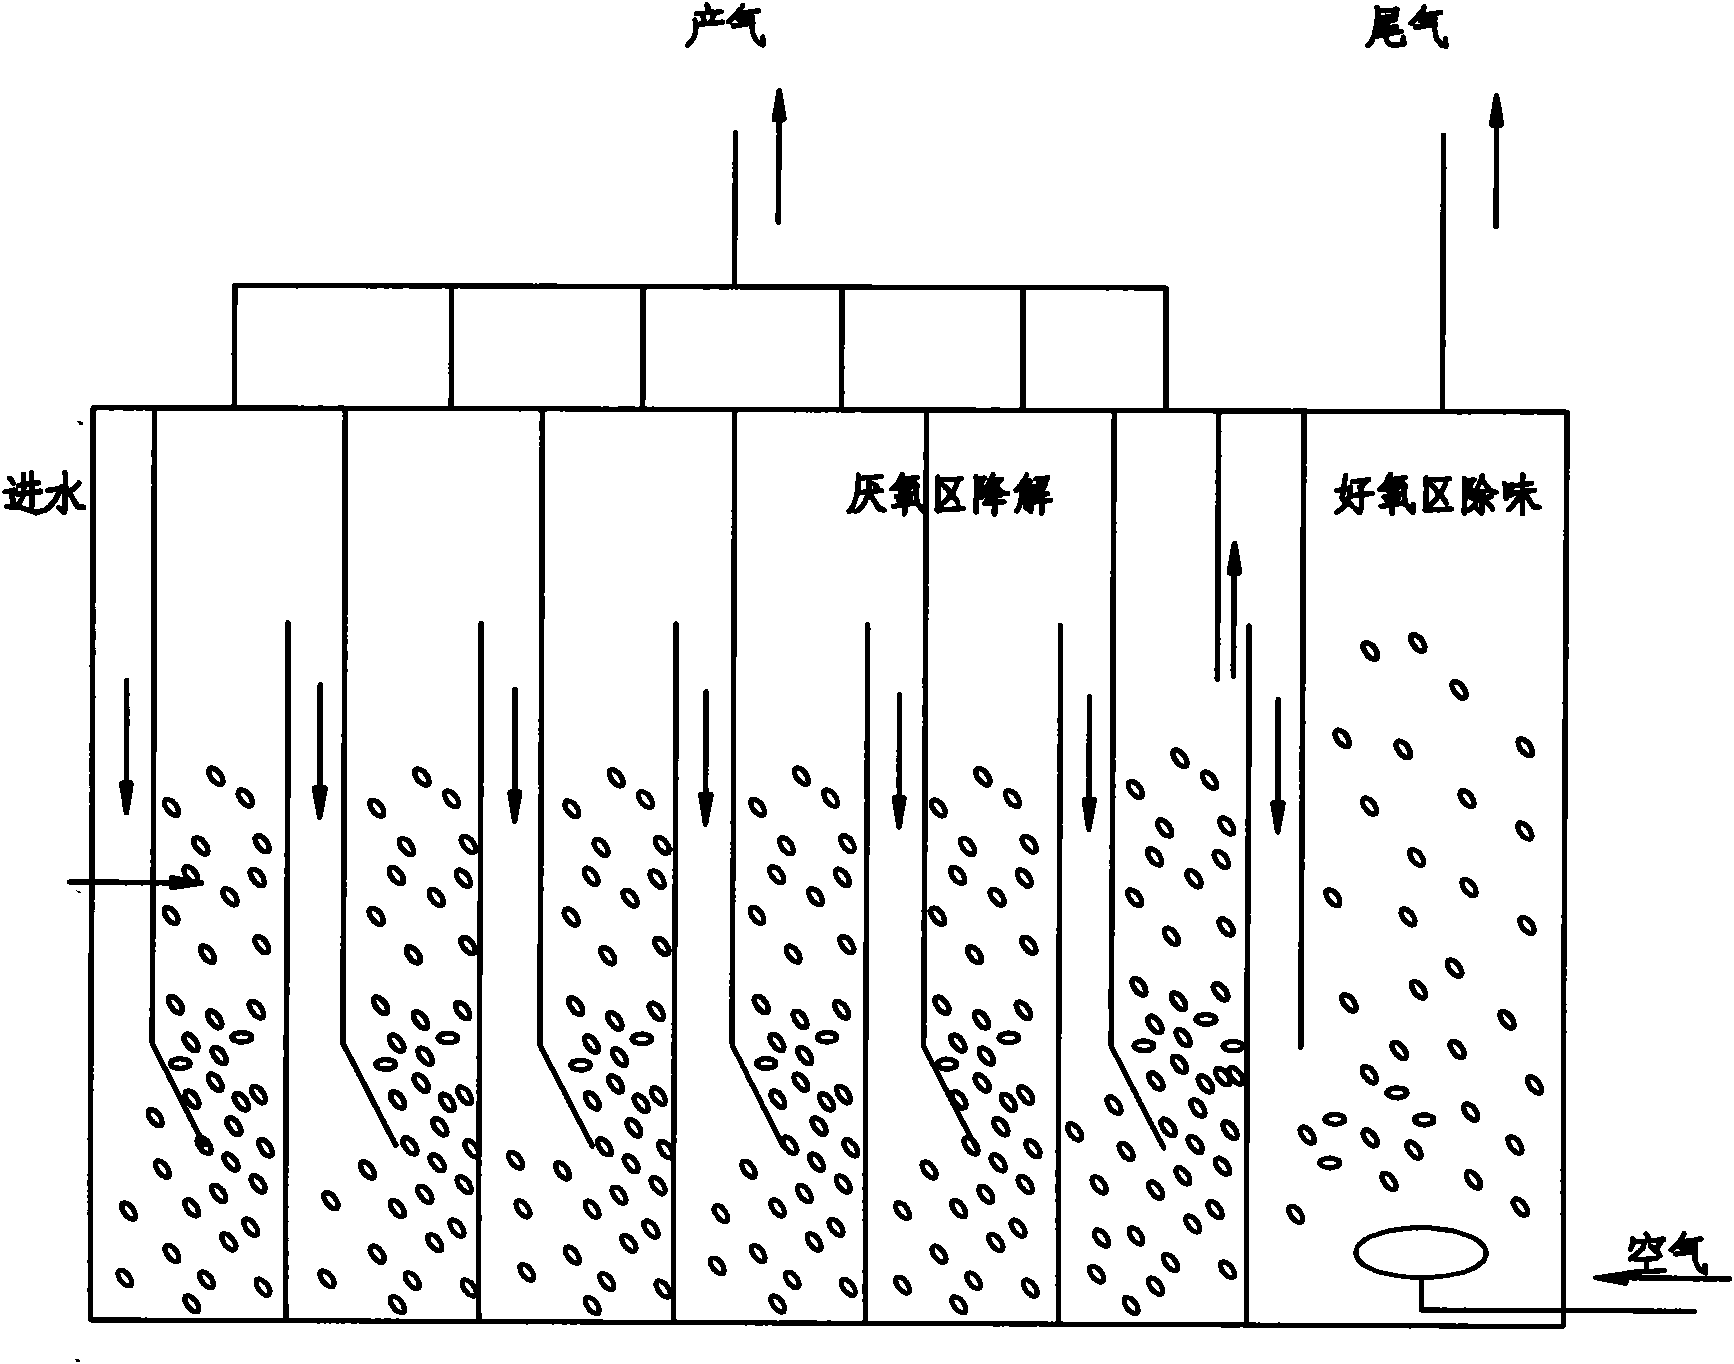 Advanced treatment process of sludge containing oil